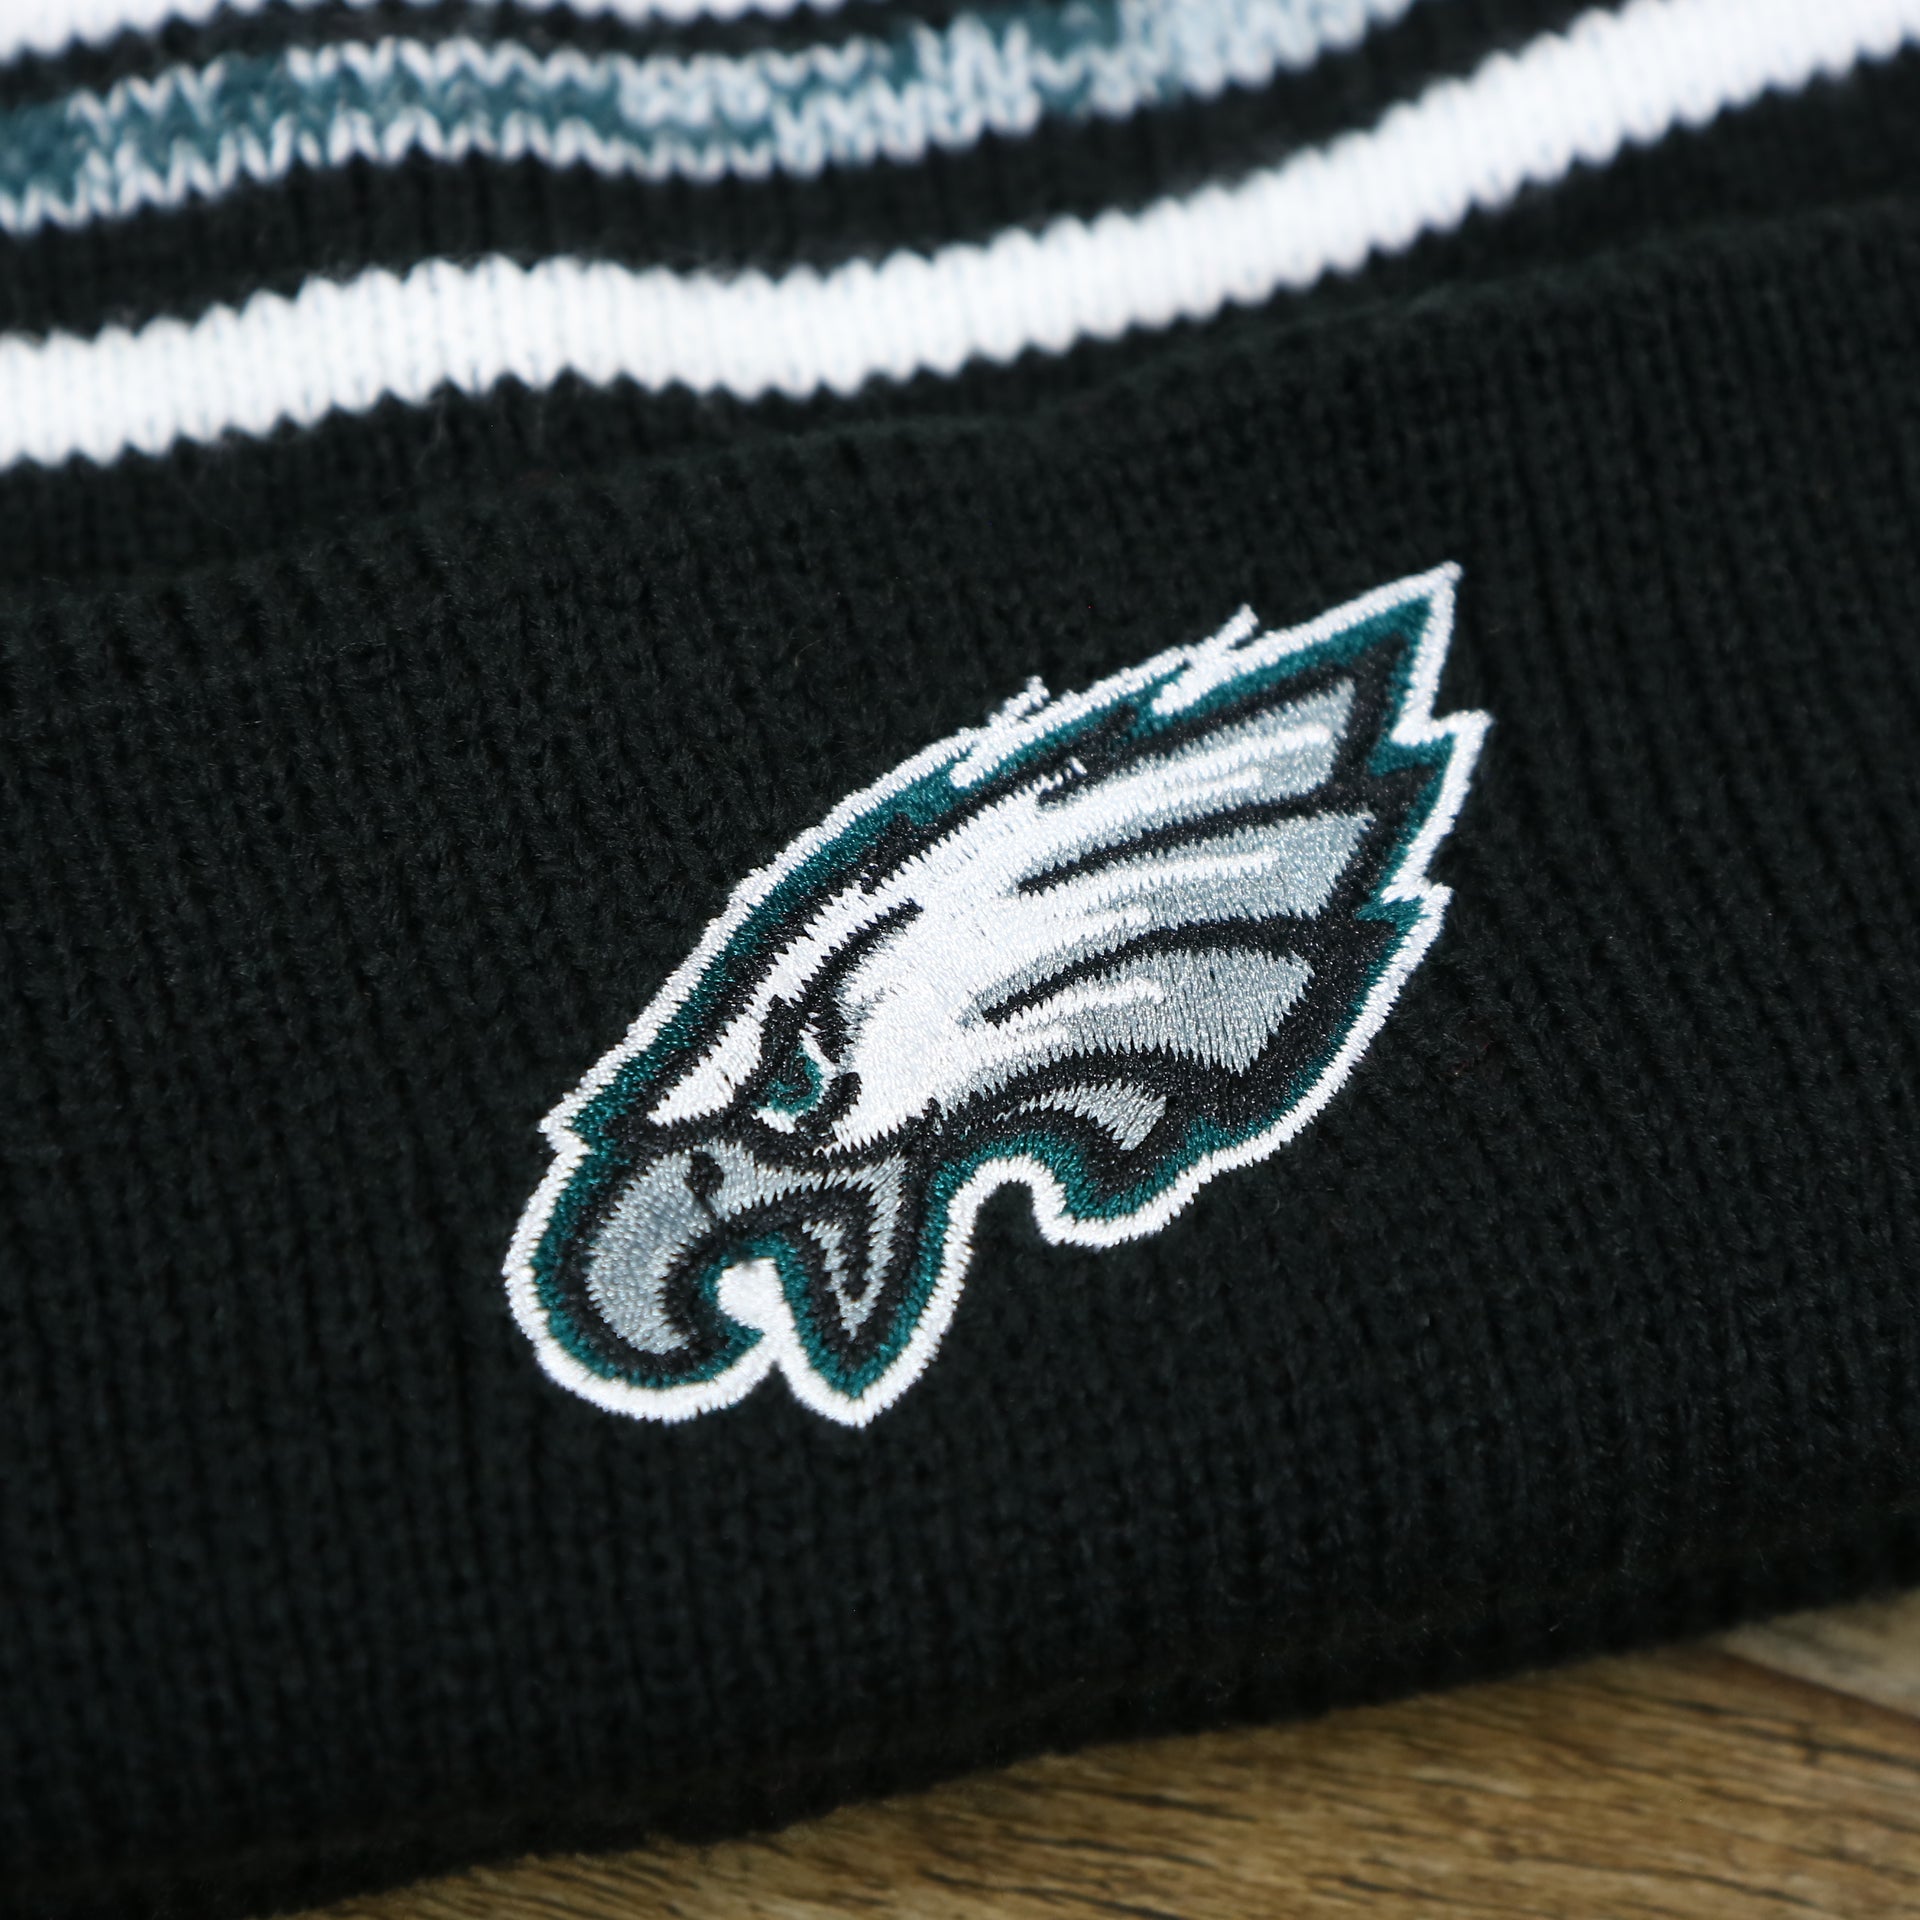 The Eagles Logo on the Kid’s Philadelphia Eagles Striped Pom Pom Winter Beanie | Black, Midnight Green, And White Beanie